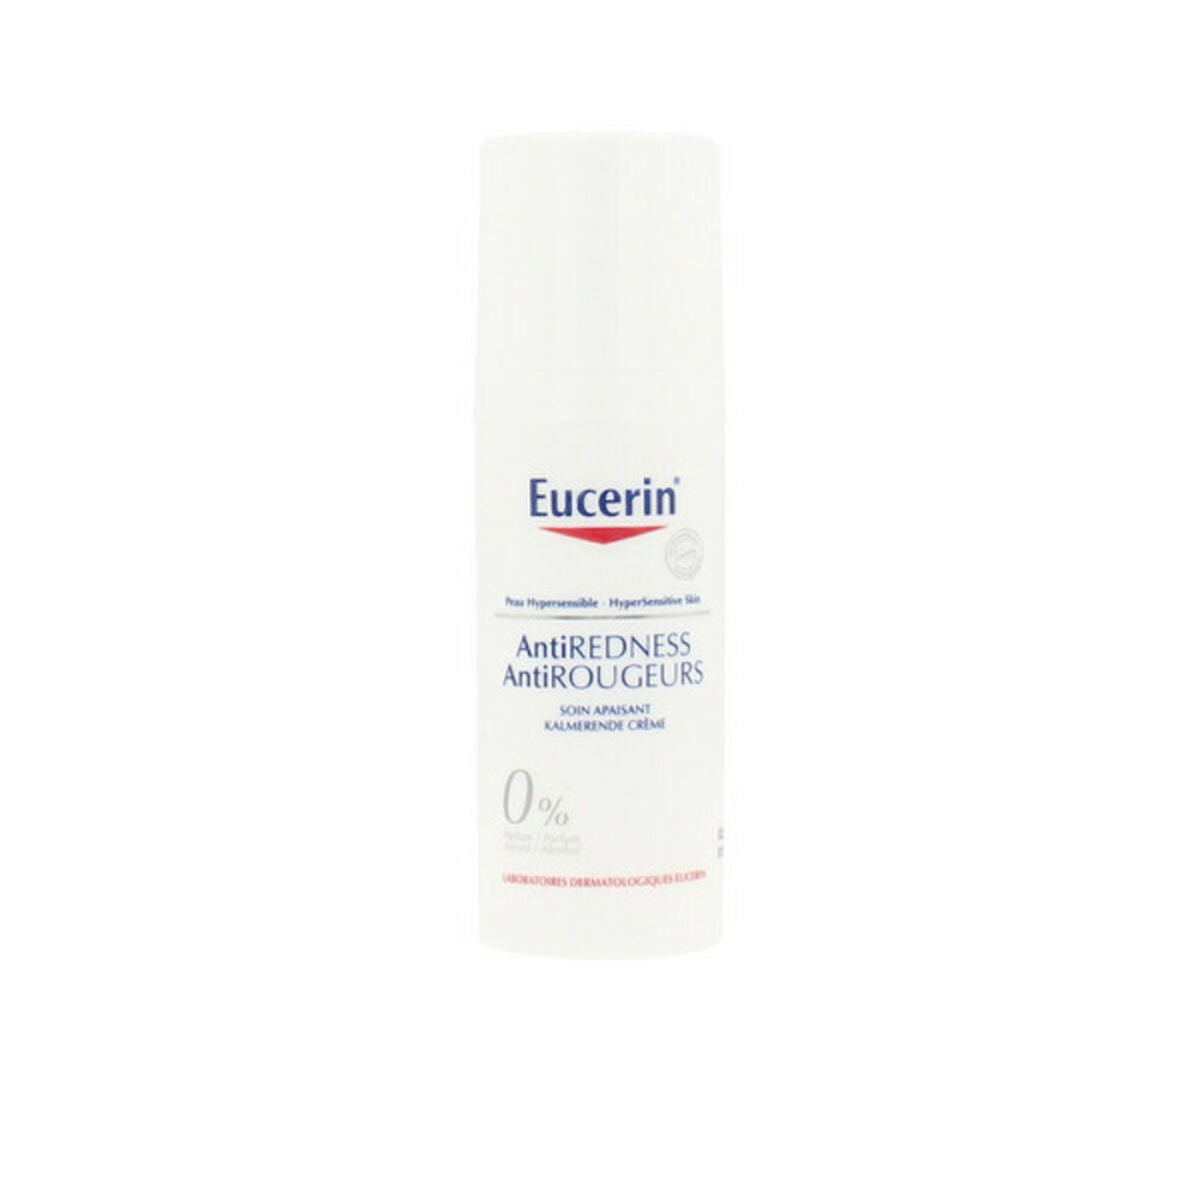 Soothing Cream Antiredness Eucerin 3908381 50 ml (50 ml)-0